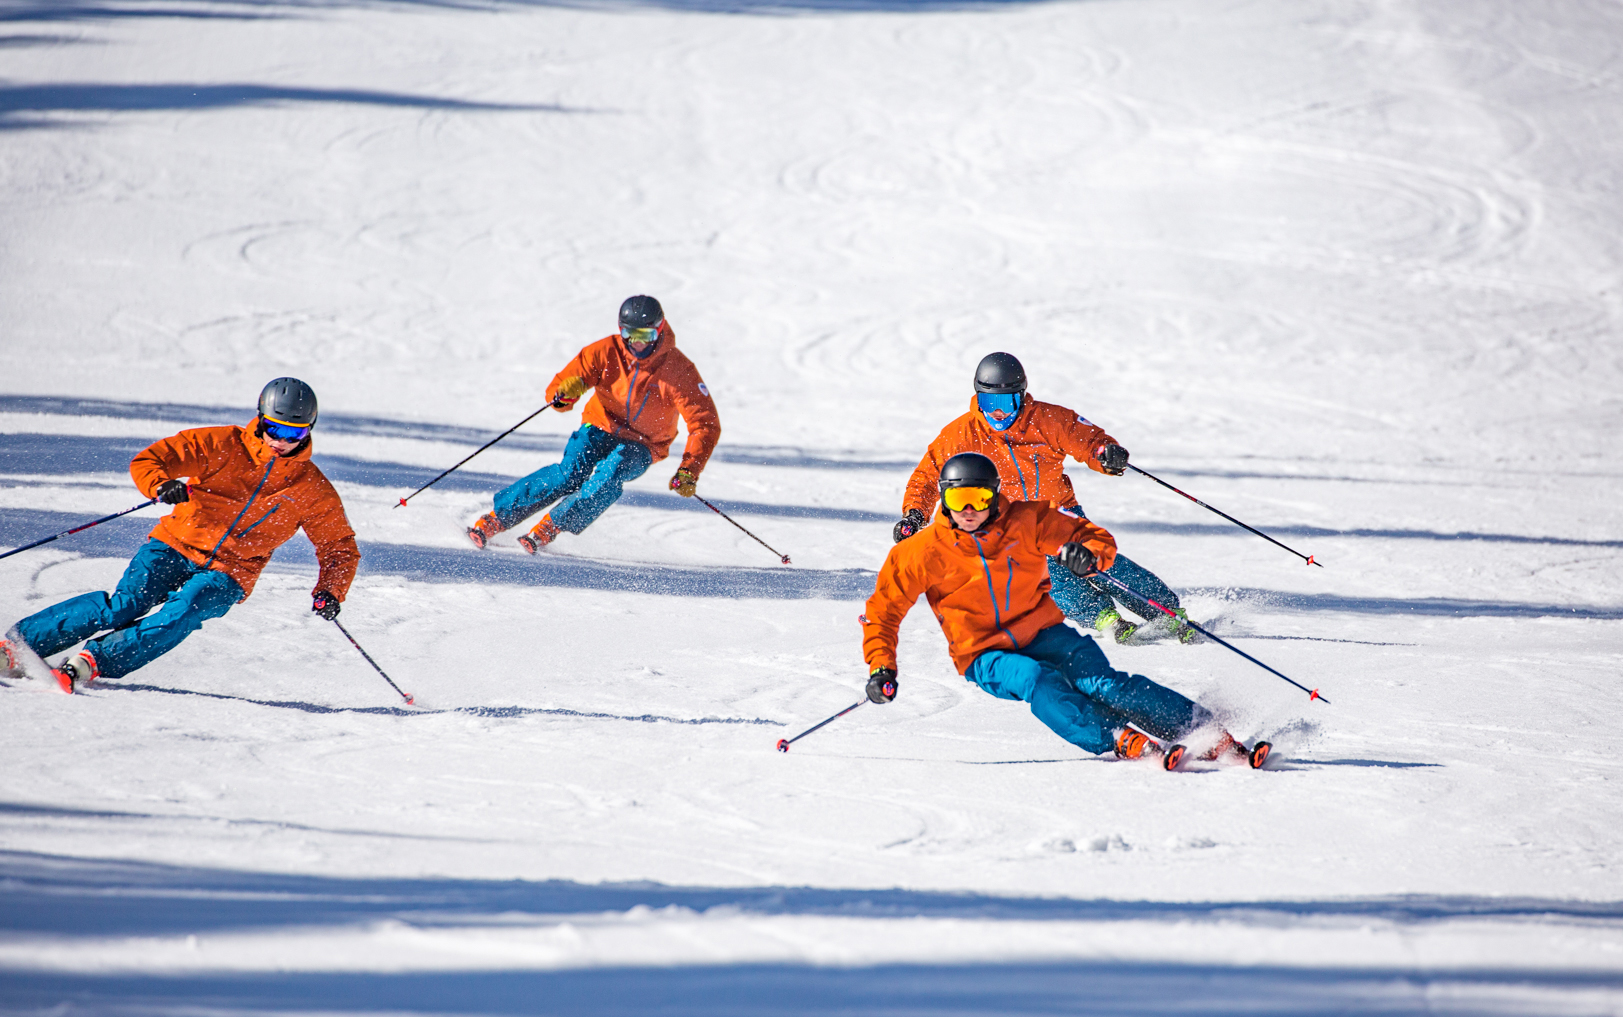 The PSIA Alpine Team skis at Demonstration Run at Interski 2019